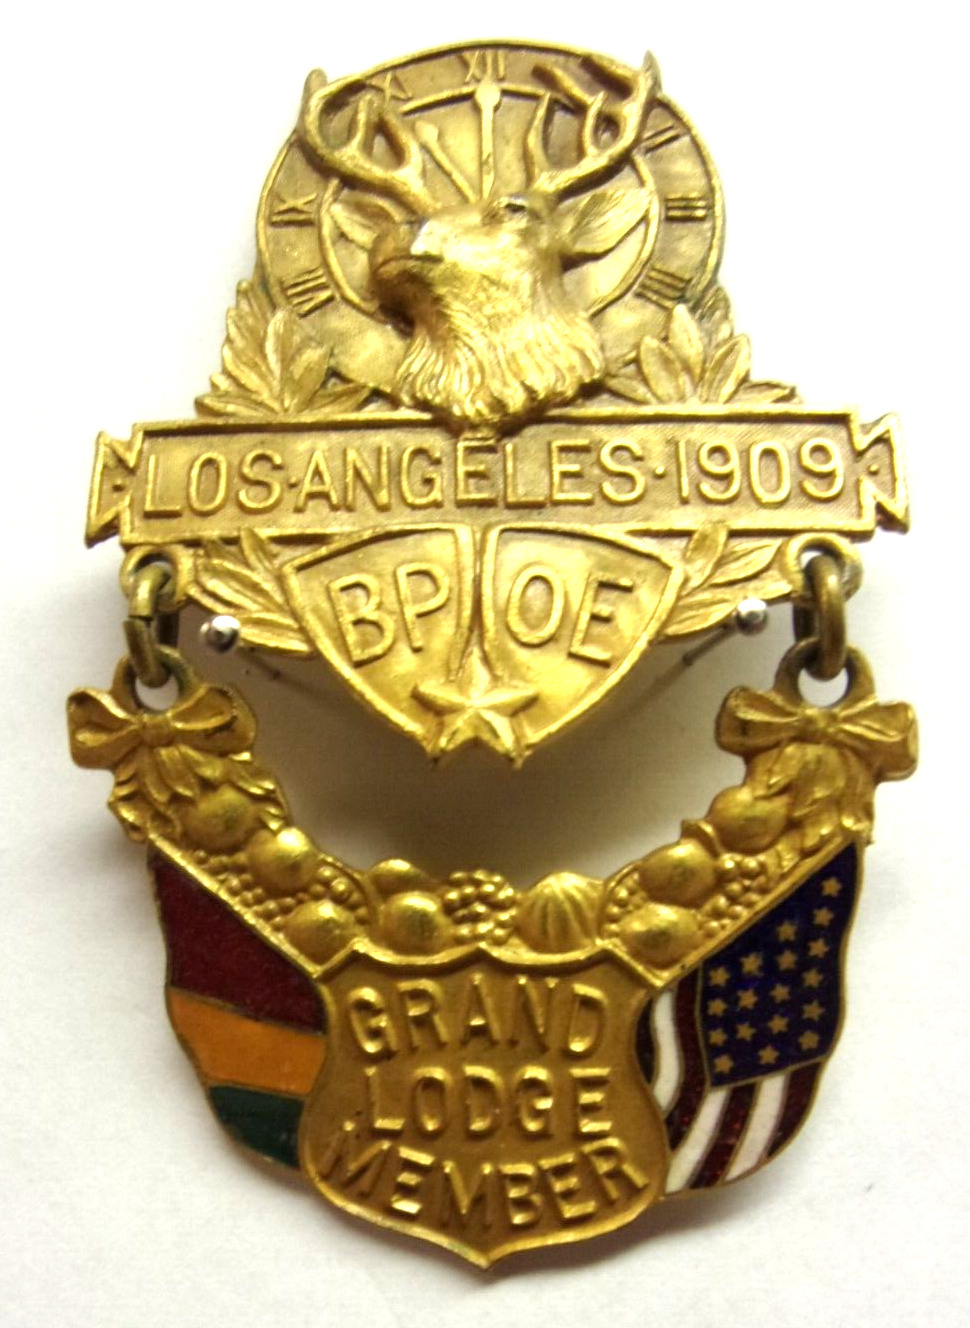 1909 BPOE ELKS LOS ANGELES REUNION GRAND LODGE MEMBER Brass Pin